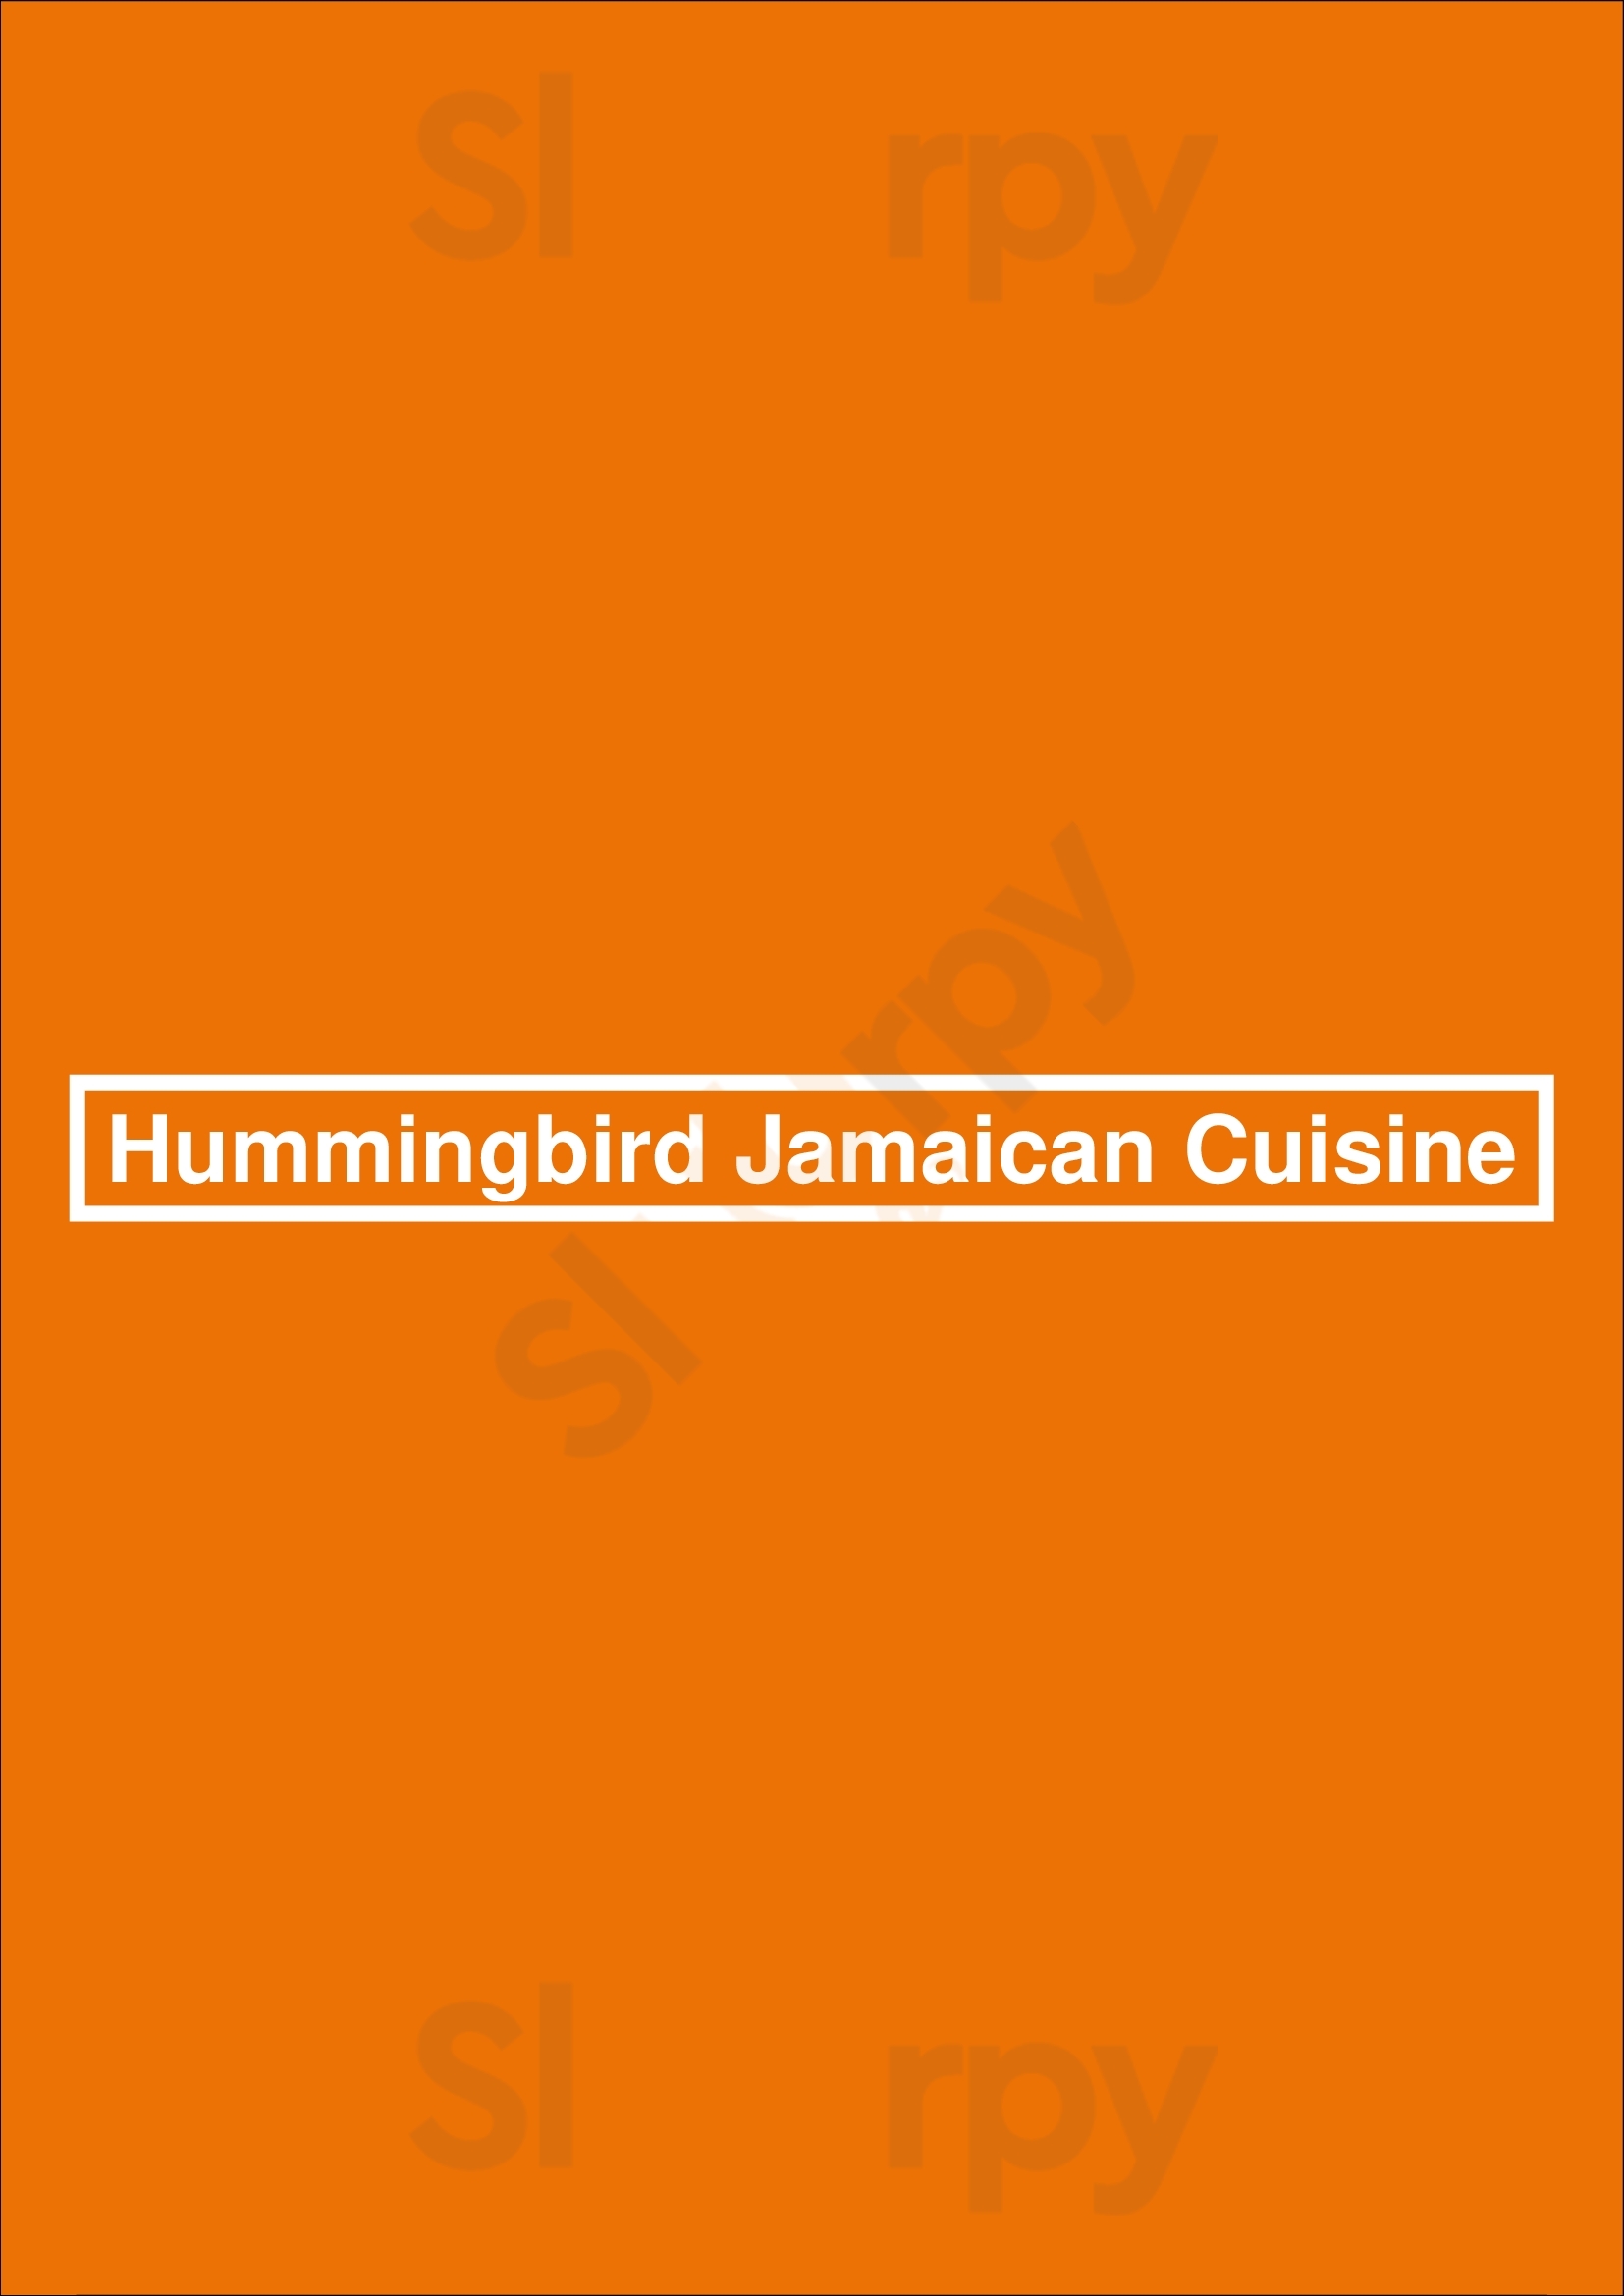 Hummingbird Jamaican Cuisine Springfield Menu - 1